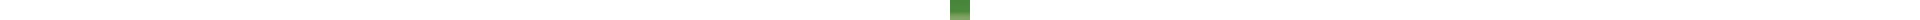 Crayon de couleur DERWENT Inktense DERWENT Inktense:1520-vert de hooker